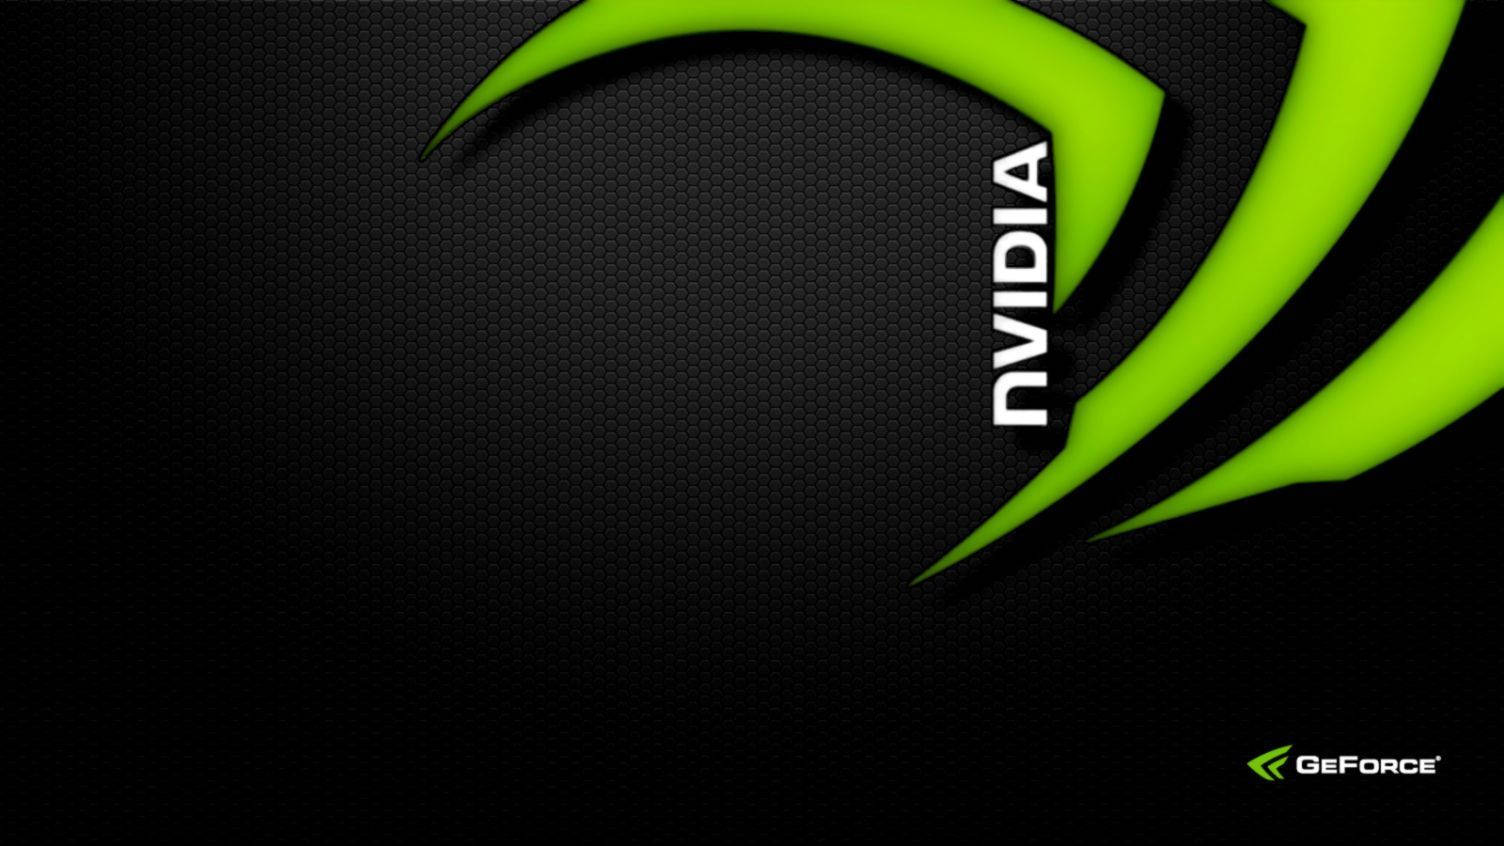 Nvidiagreen Geforce: Nvidia Grön Geforce. Wallpaper